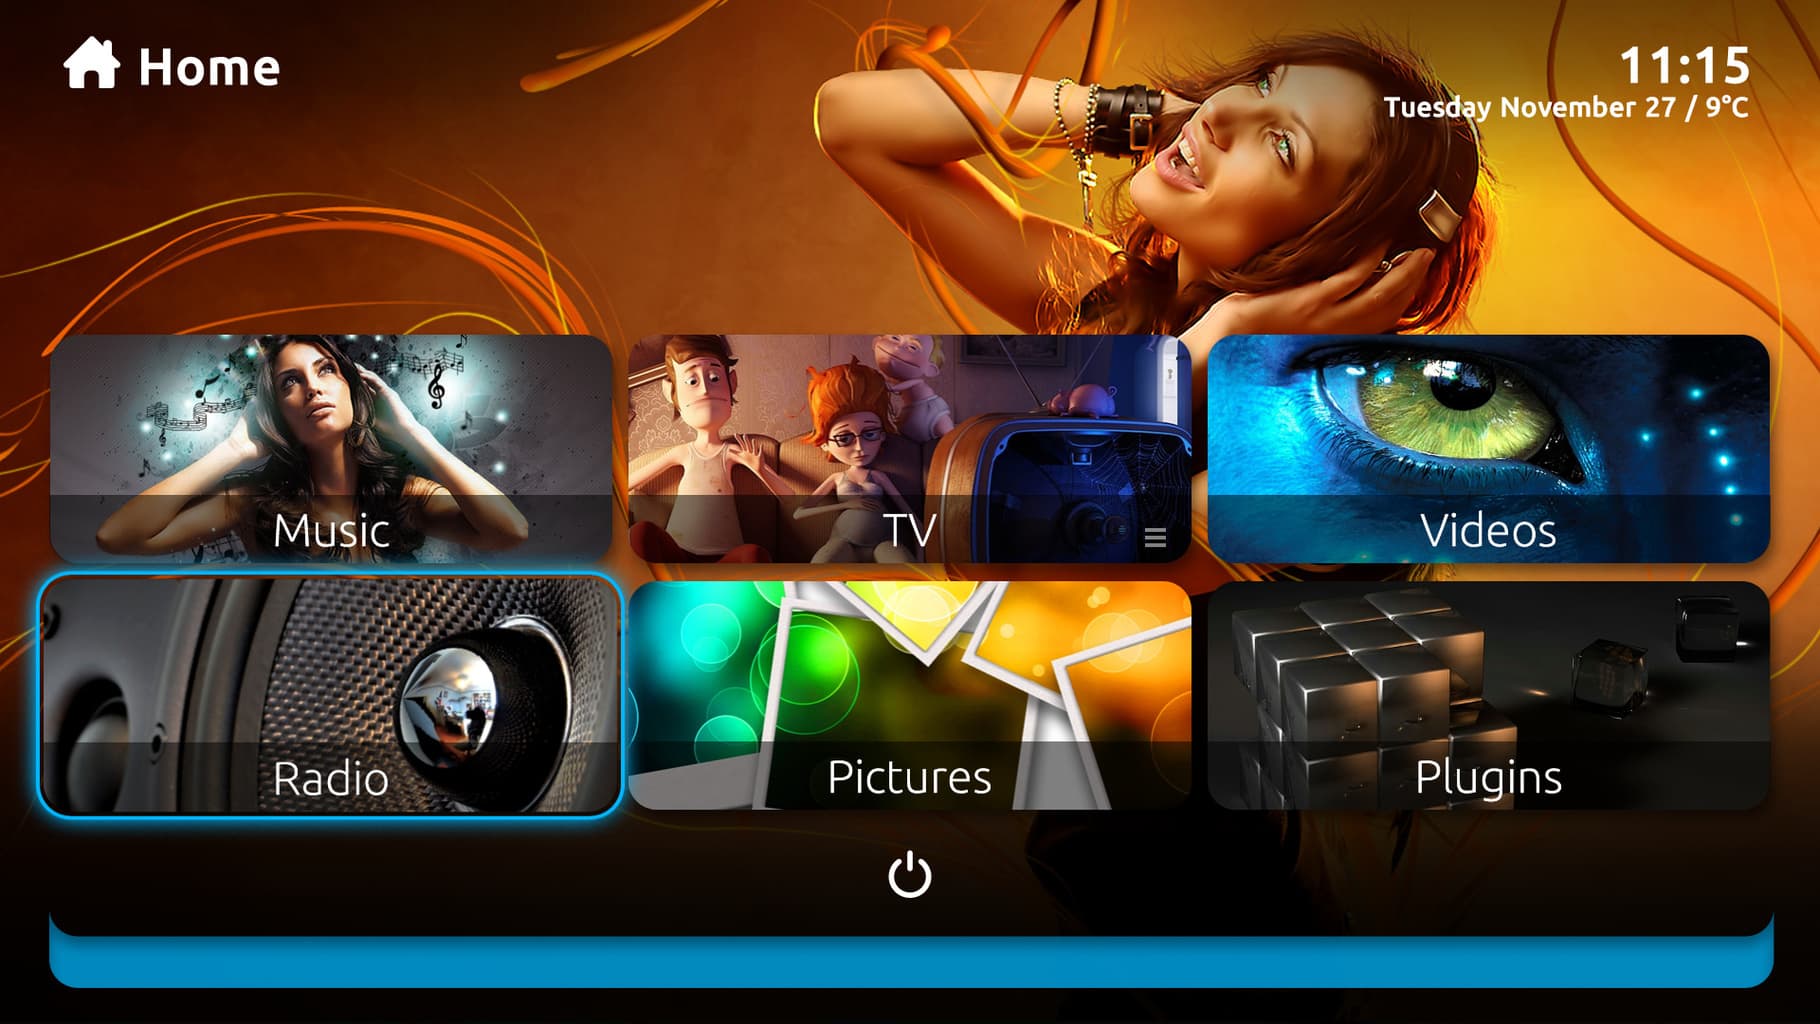 Stream media using Windows Media Player with Xbox 360